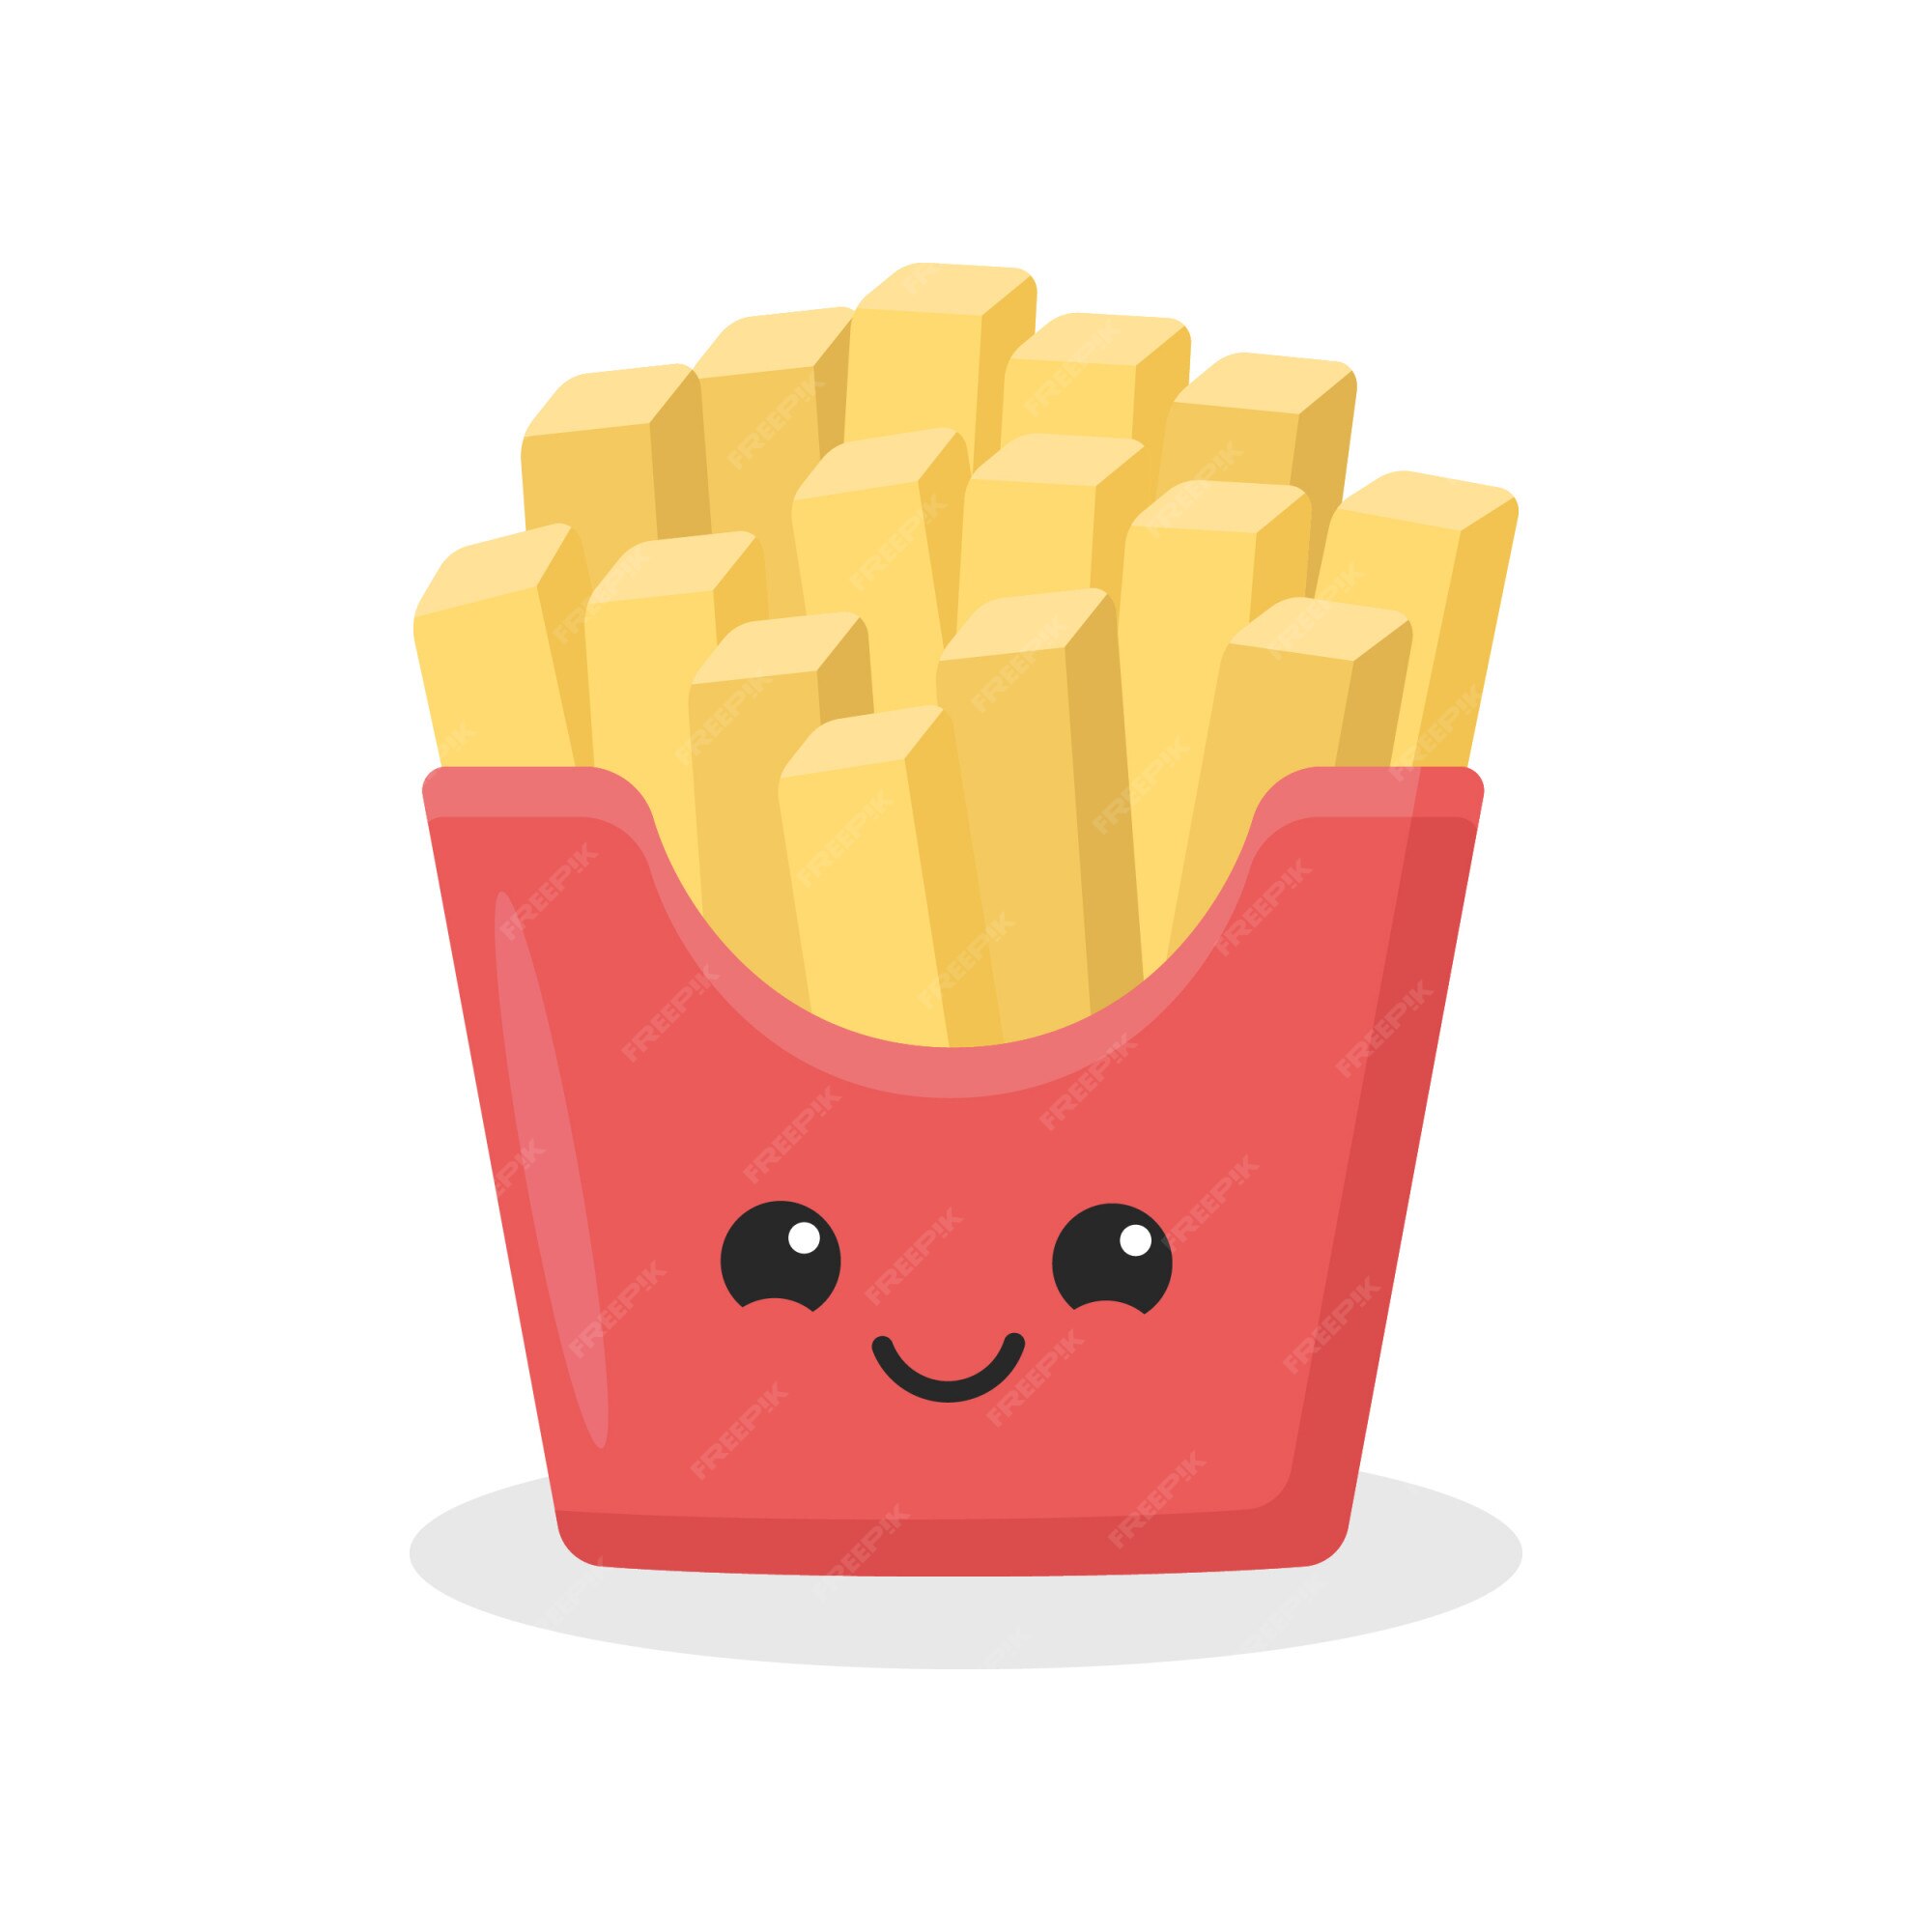 Premium Vector | Cute fries kawaii character